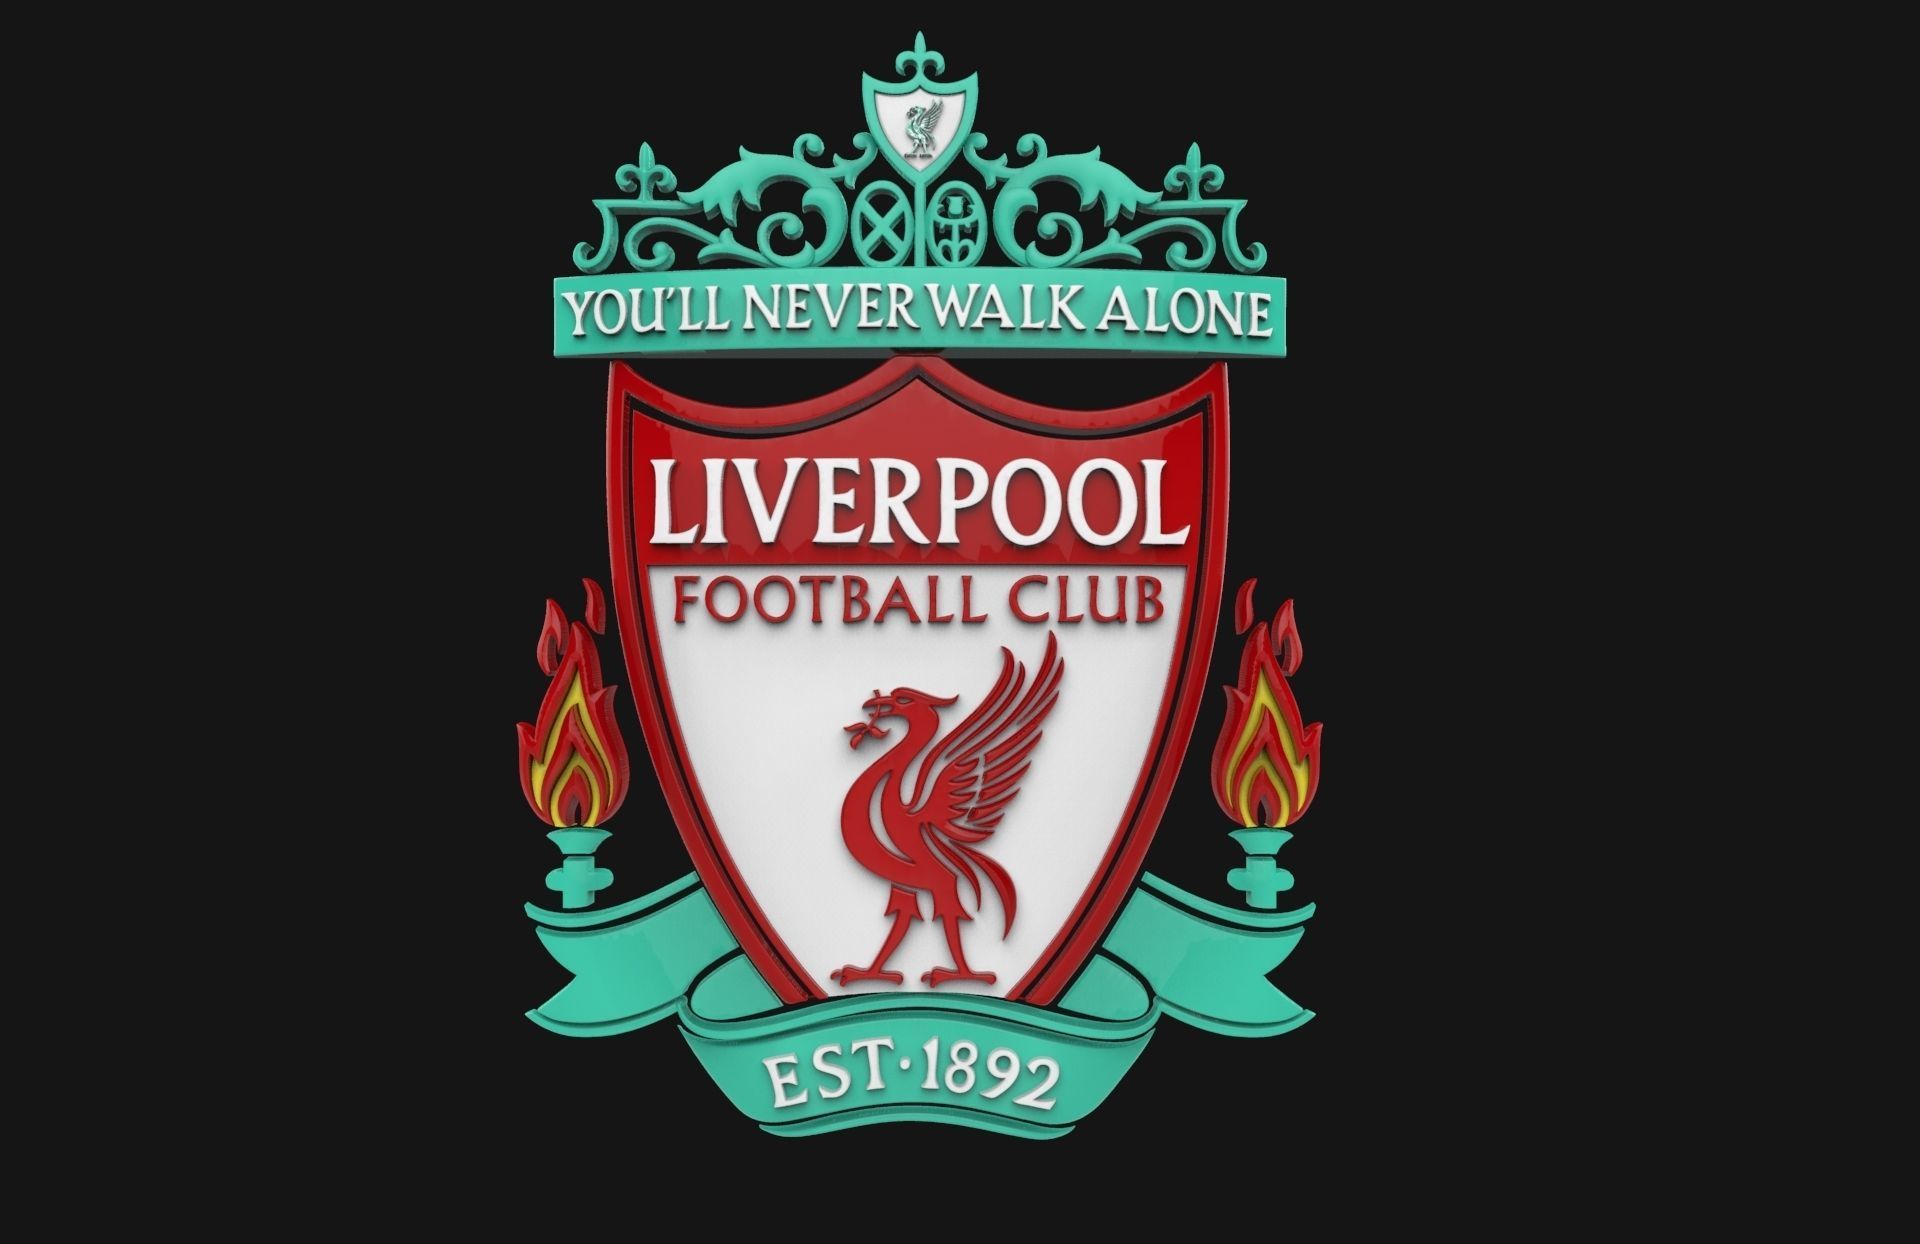 Liverpool Football Club: NH Foods (China)